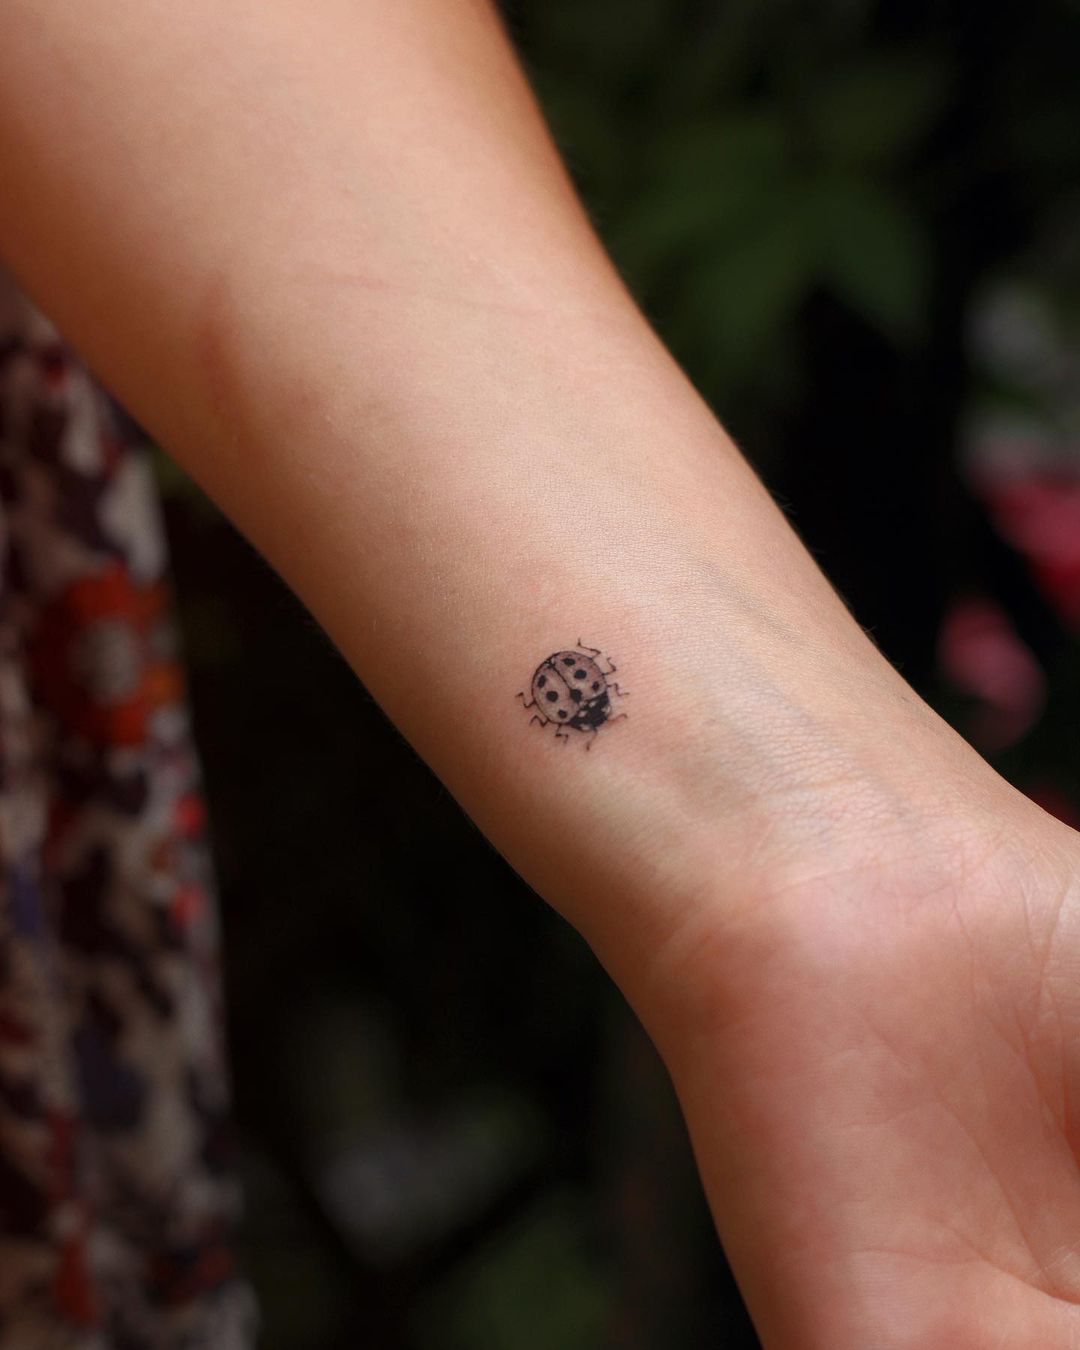 Amazing ladybird tattoo by badlystuffedanimal